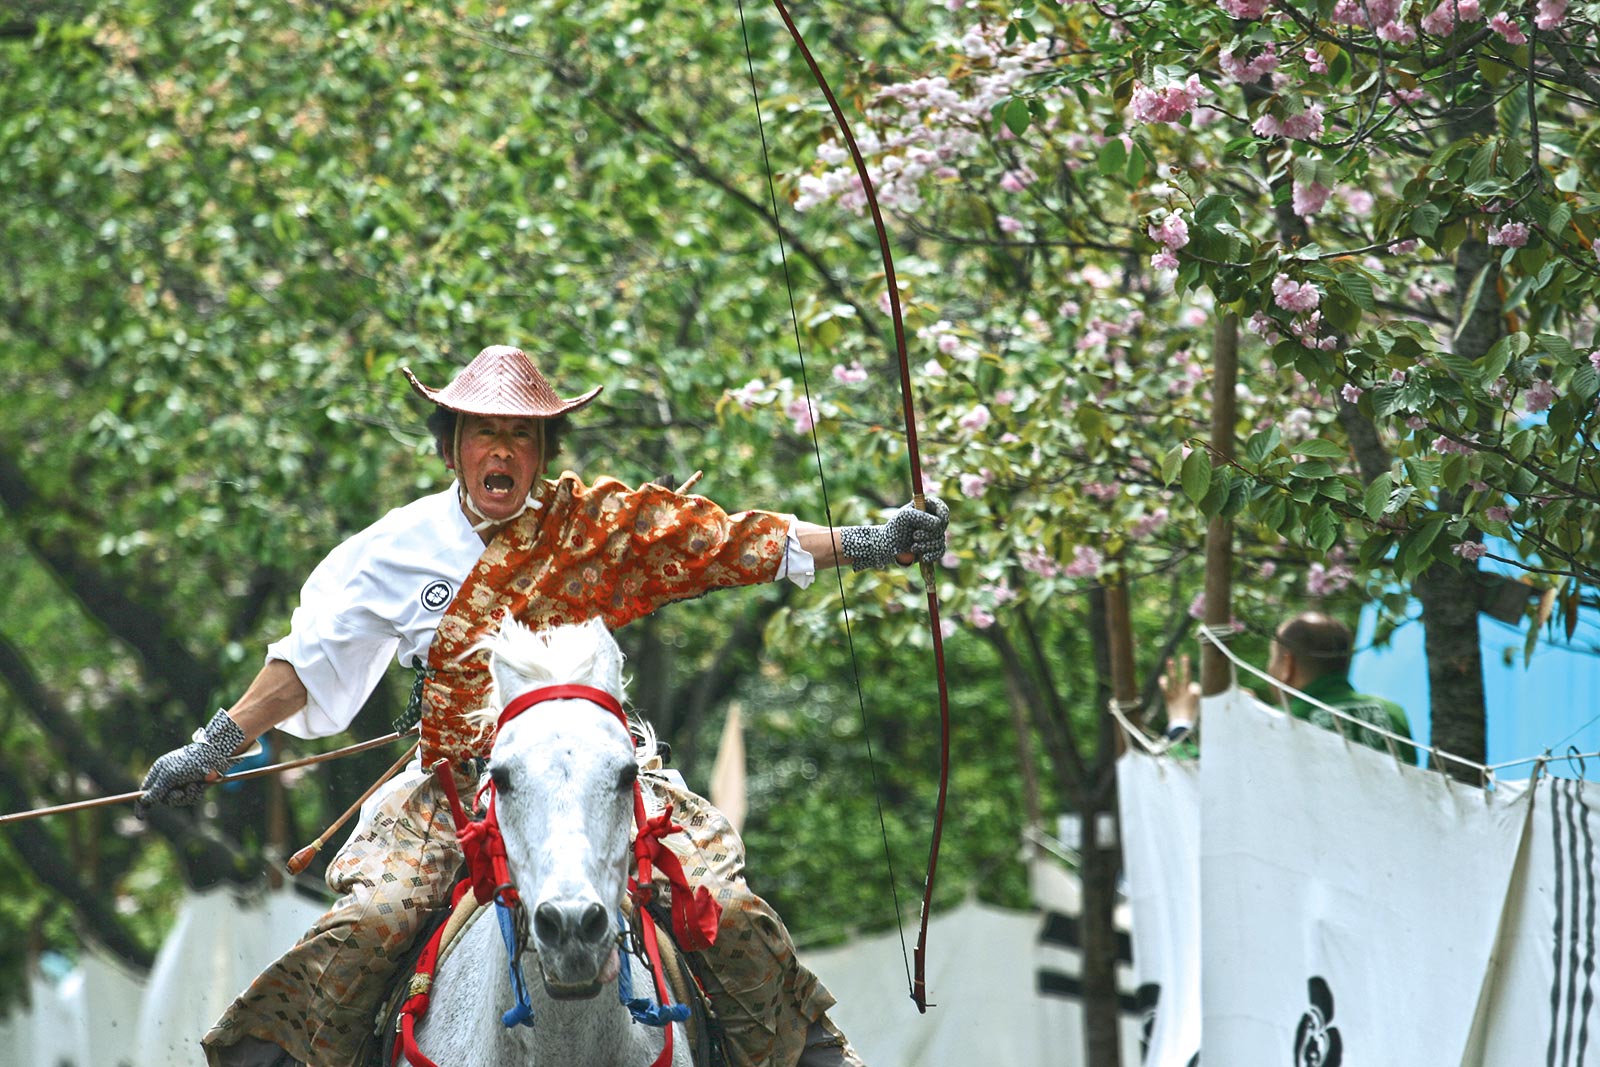 Yabusame horseback archery in full Samural gear